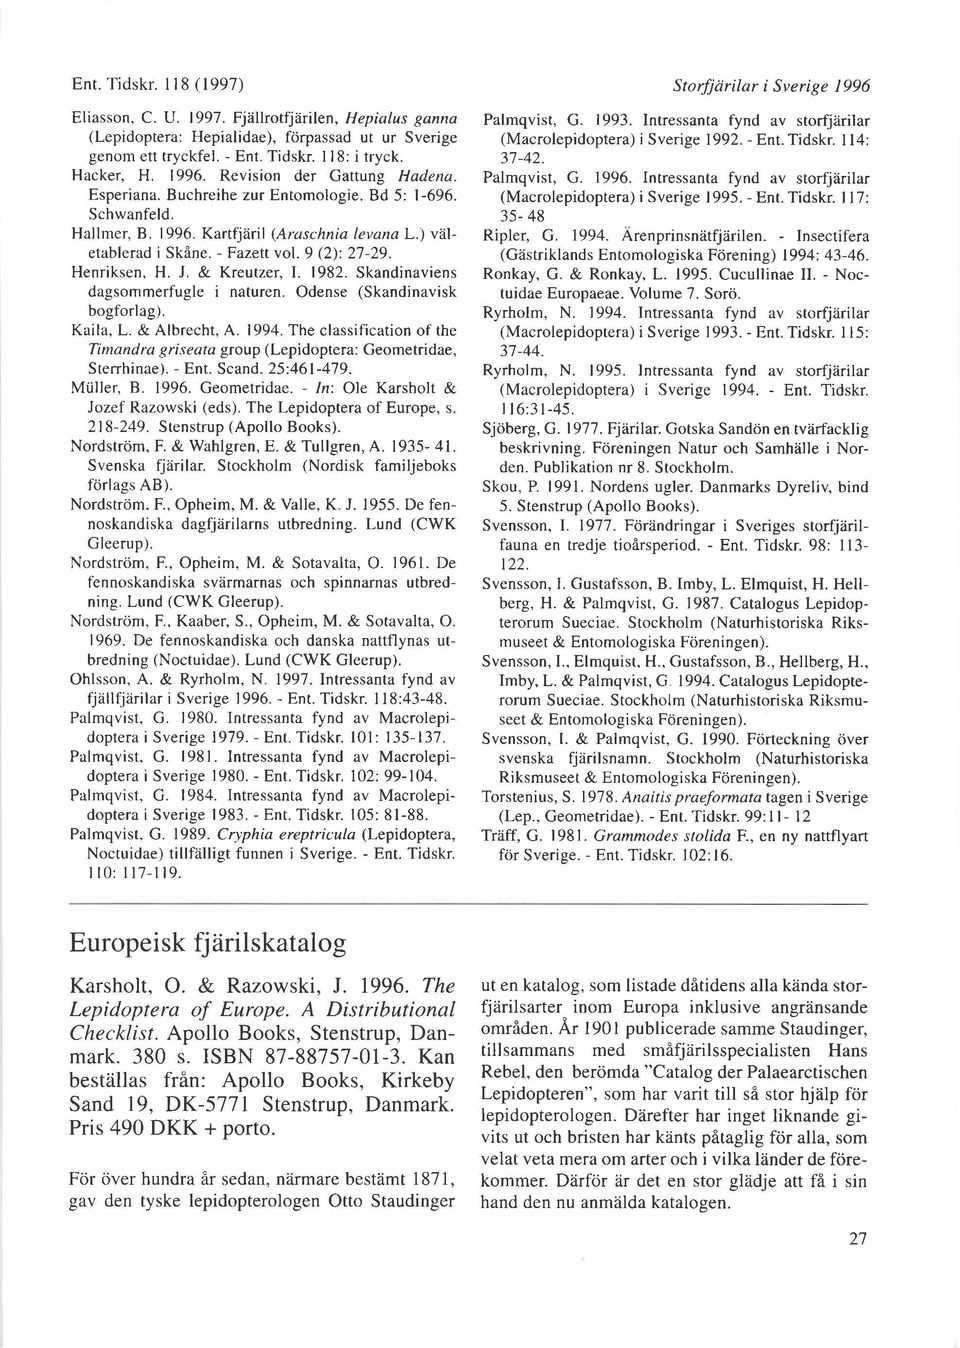 Henriksen, H. J. & Kreutzer, I. 1982. Skandinaviens dagsommerfugle i naturen. Odense (Skandinavisk bogforlag). Kaila, L. & Albrecht, A.